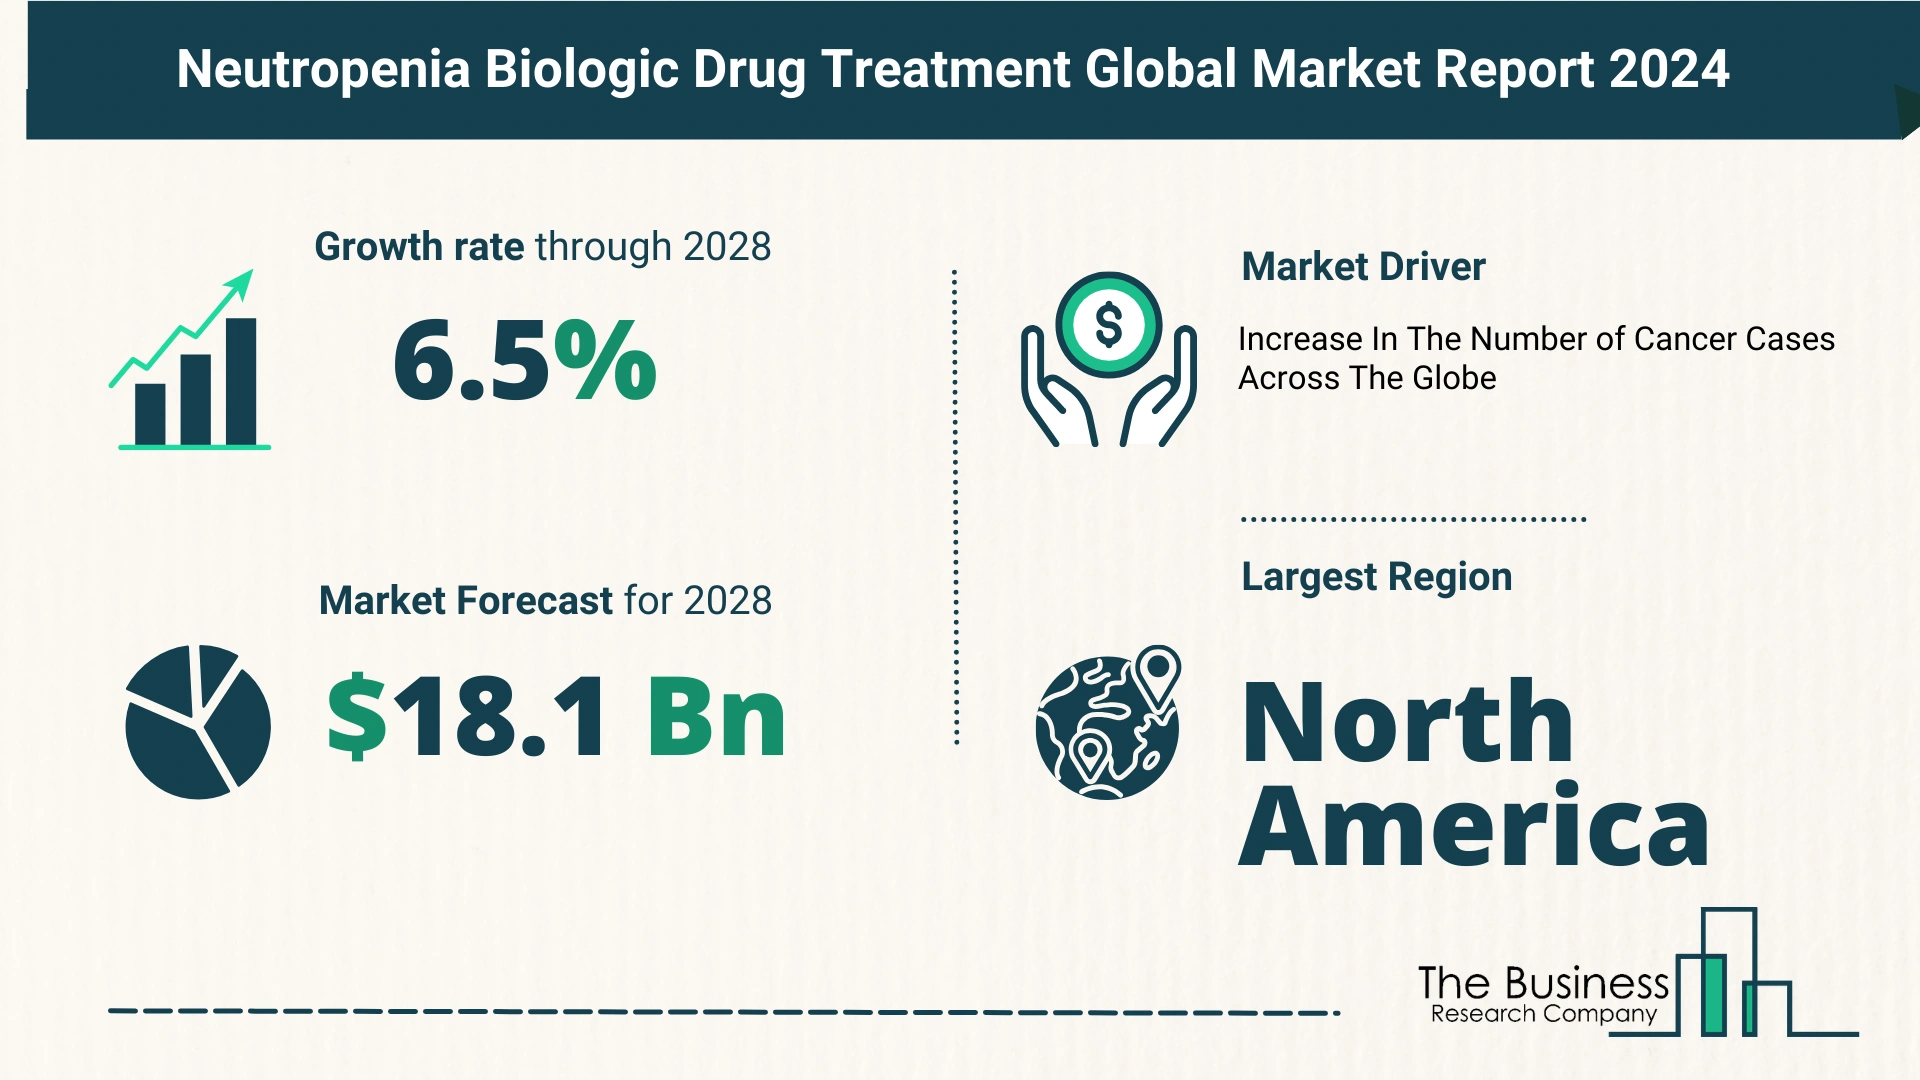 Global Neutropenia Biologic Drug Treatment Market Size